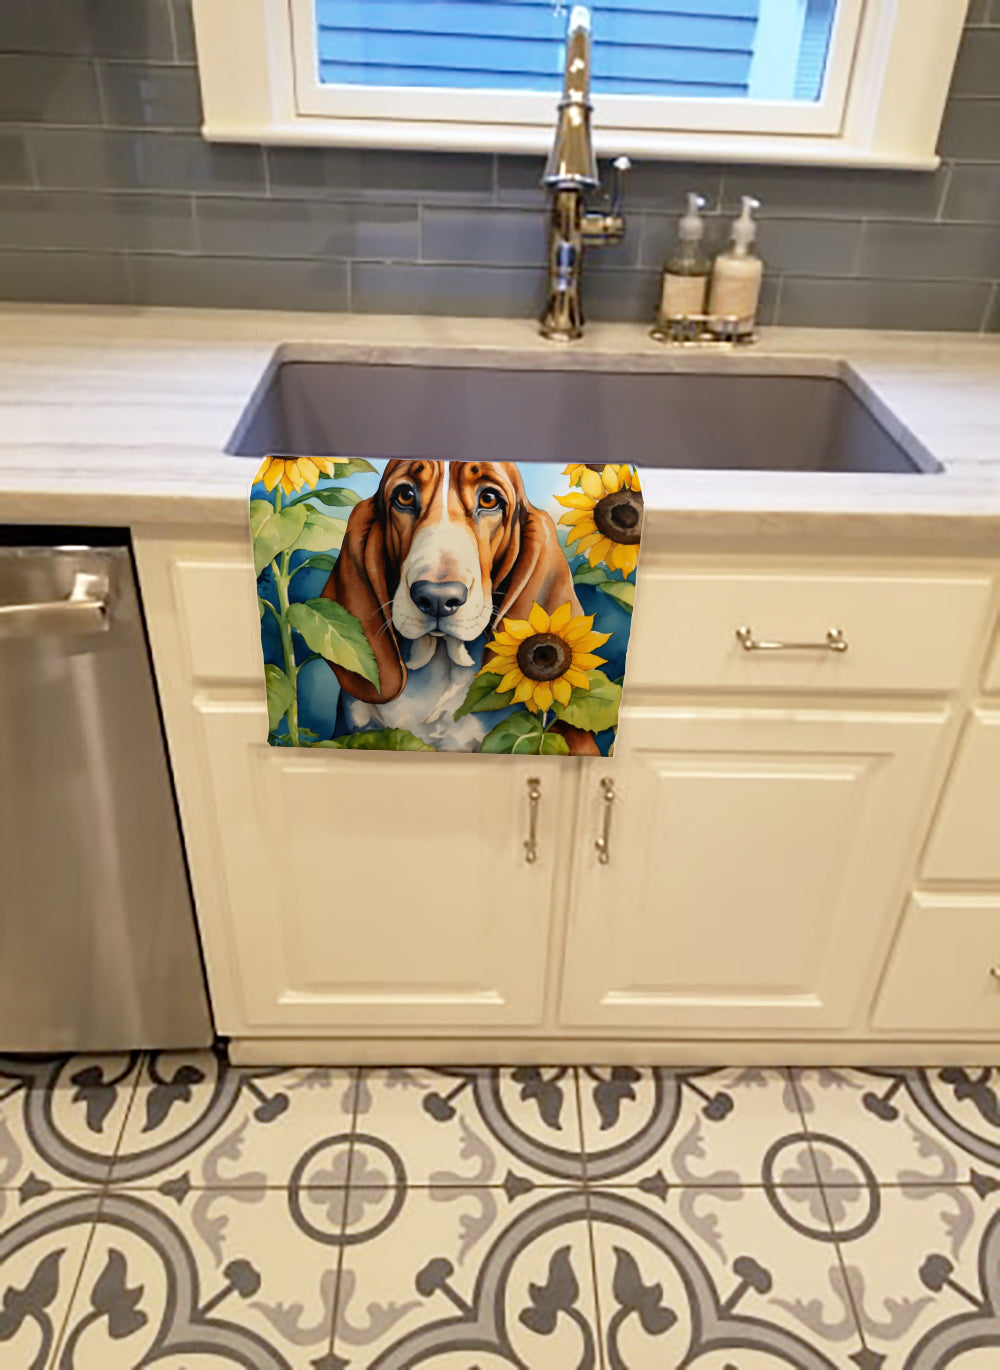 Buy this Basset Hound in Sunflowers Kitchen Towel